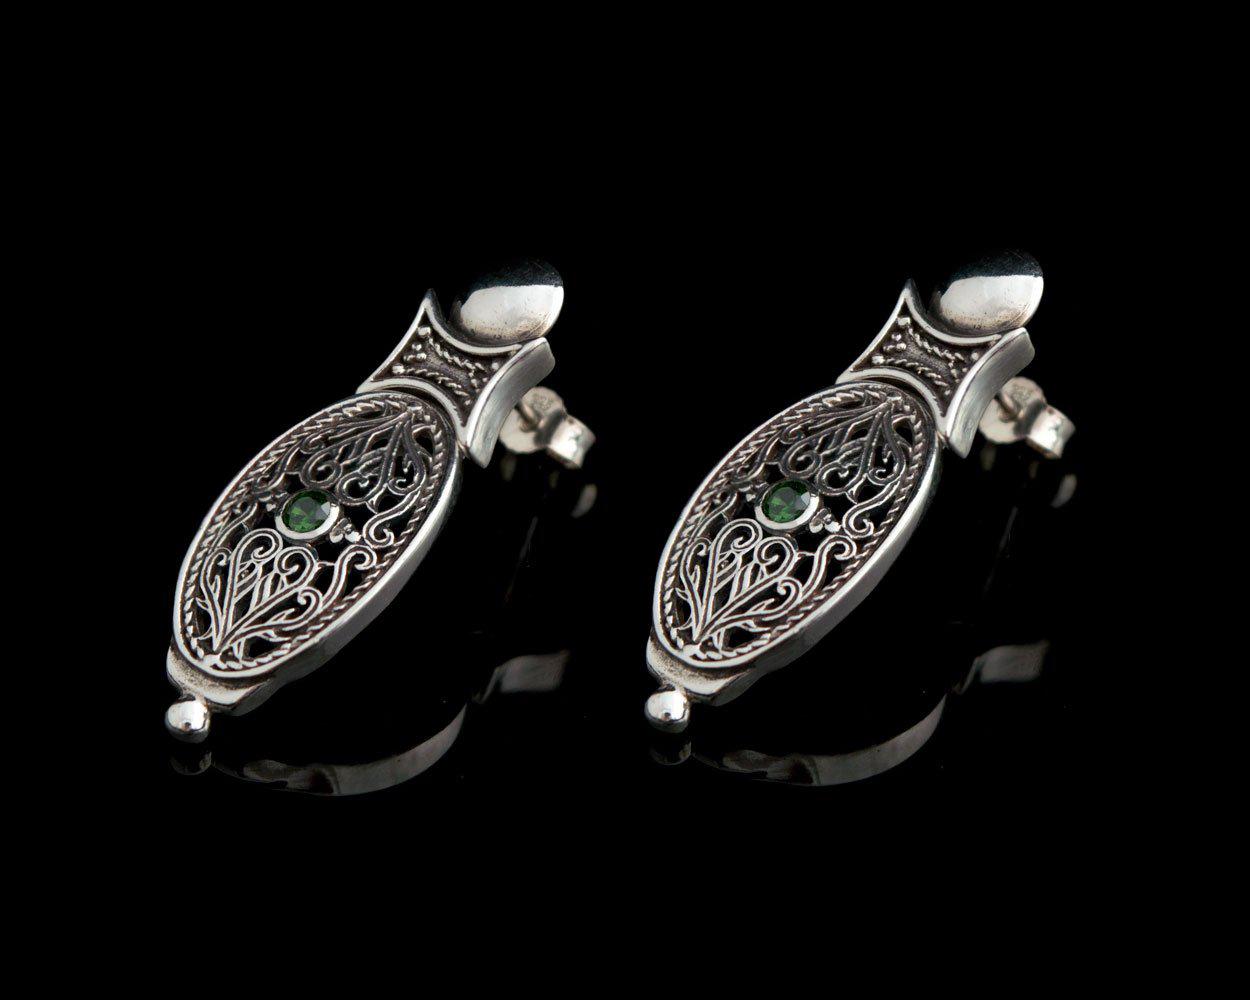 Byzantine Earrings handcrafted in Sterling Silver with zircon, sterling silver earrings (GT-09)